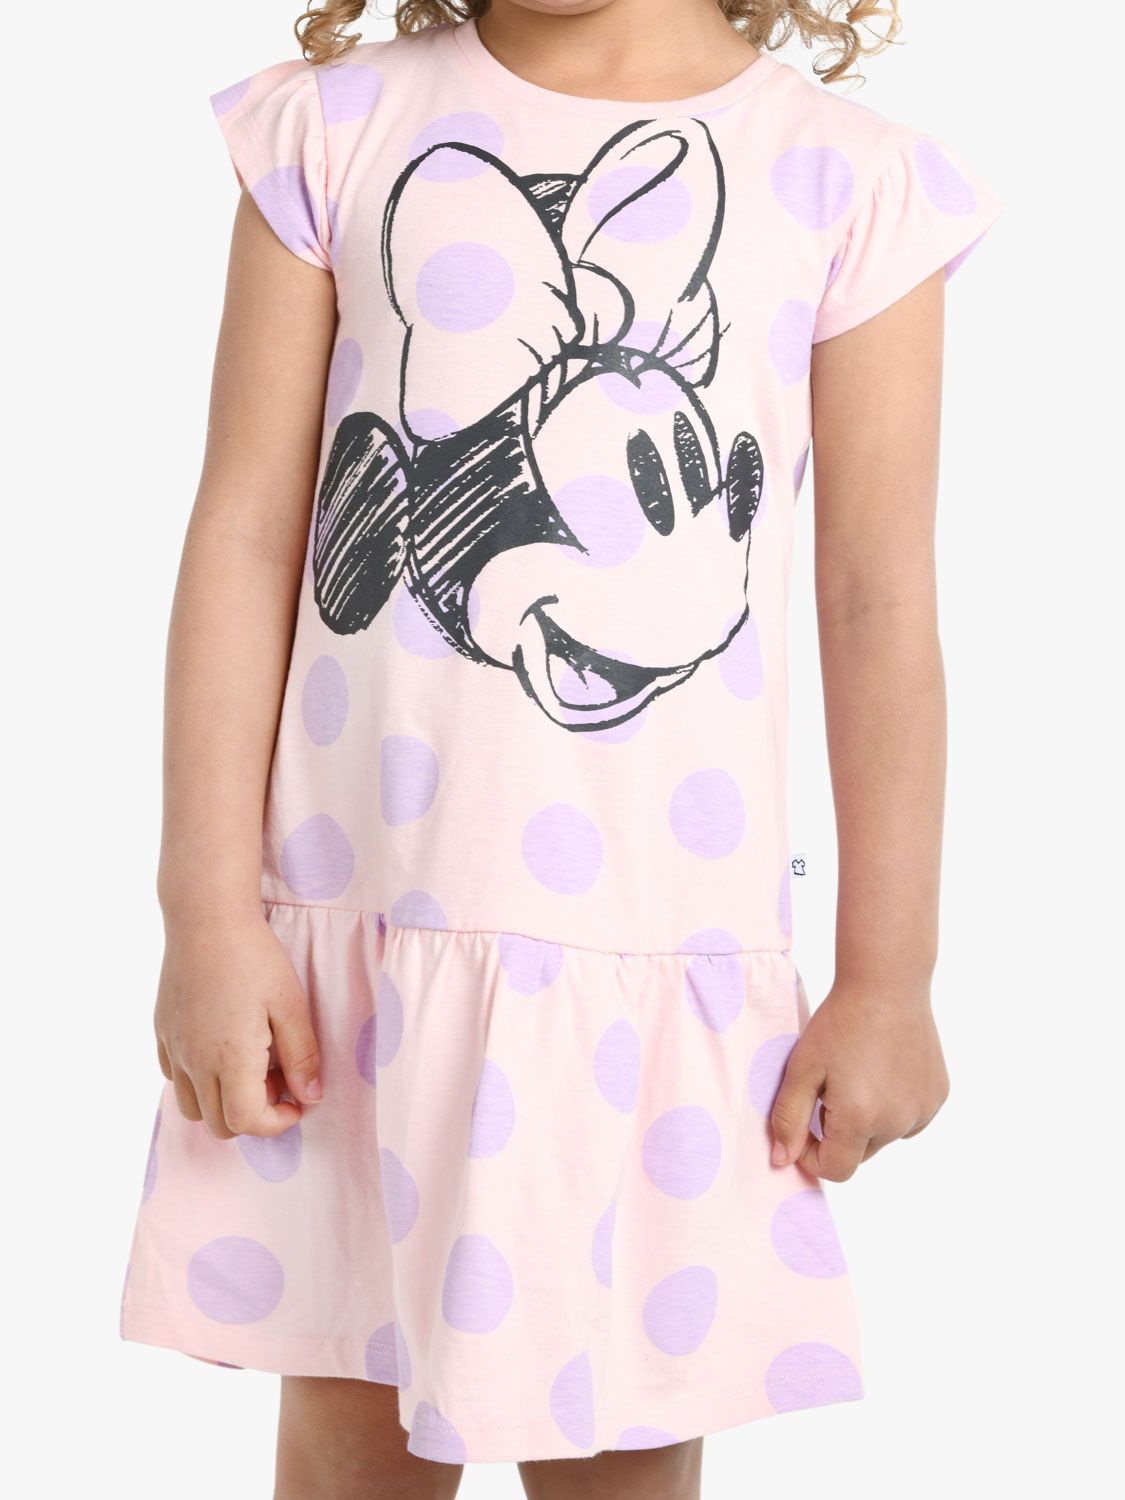 Brand Threads Kids' Disney Minnie Mouse Spot Print Frill Sleeve Dress, Pink, 1-2 years